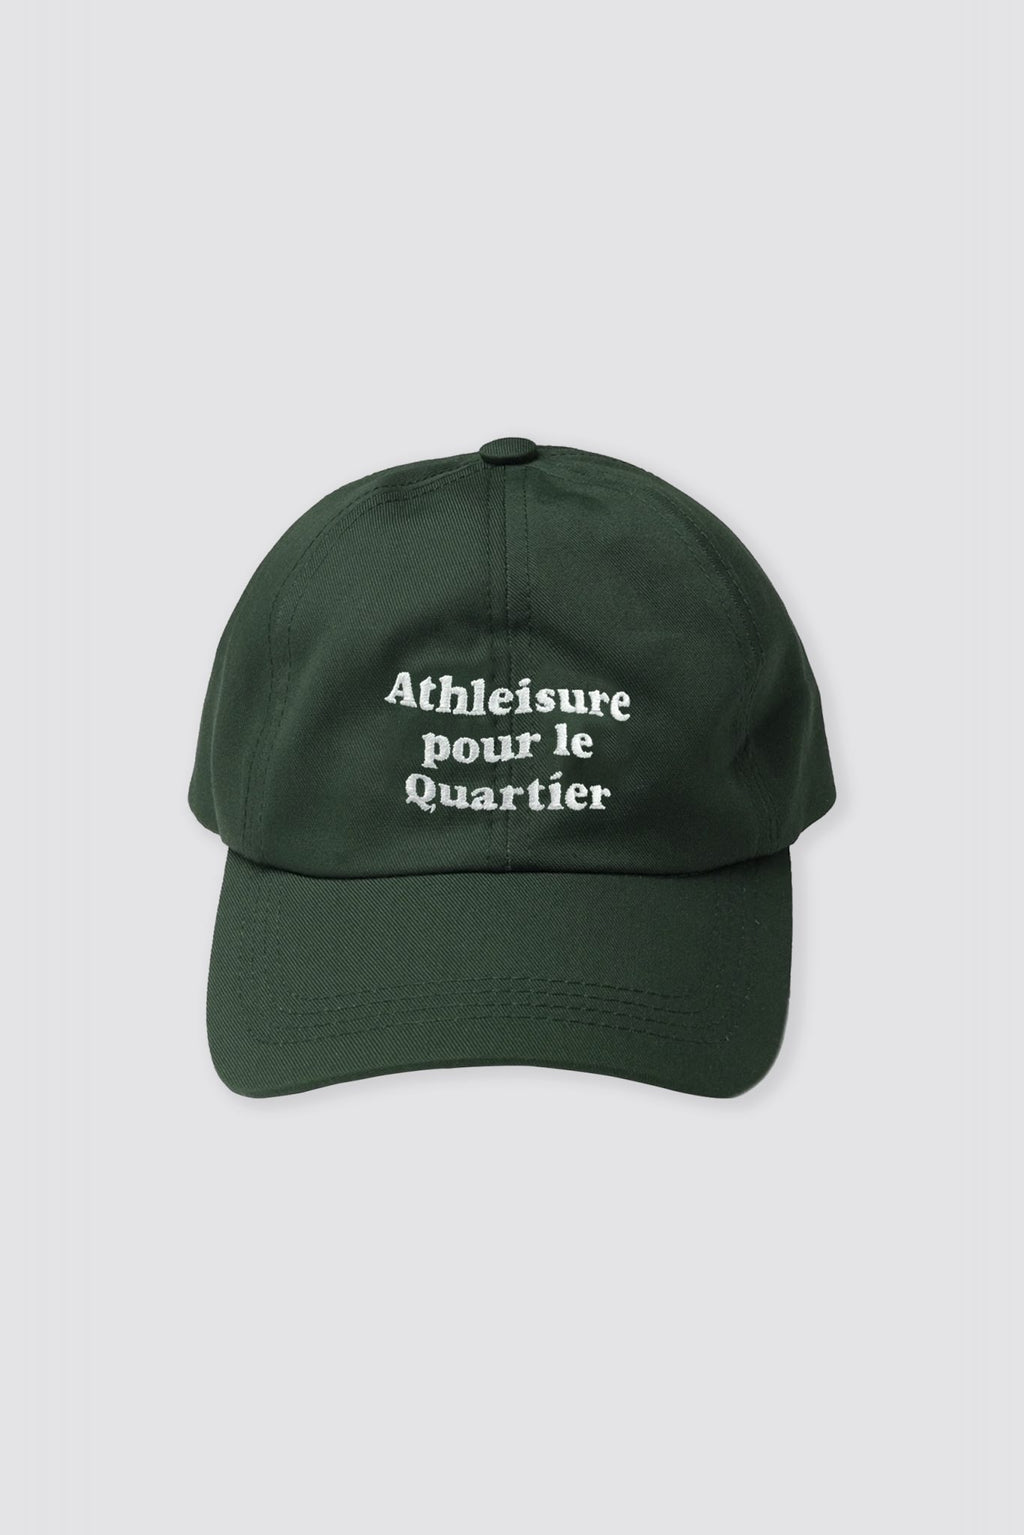 Goodies Sportive - Athleisure Green Cap